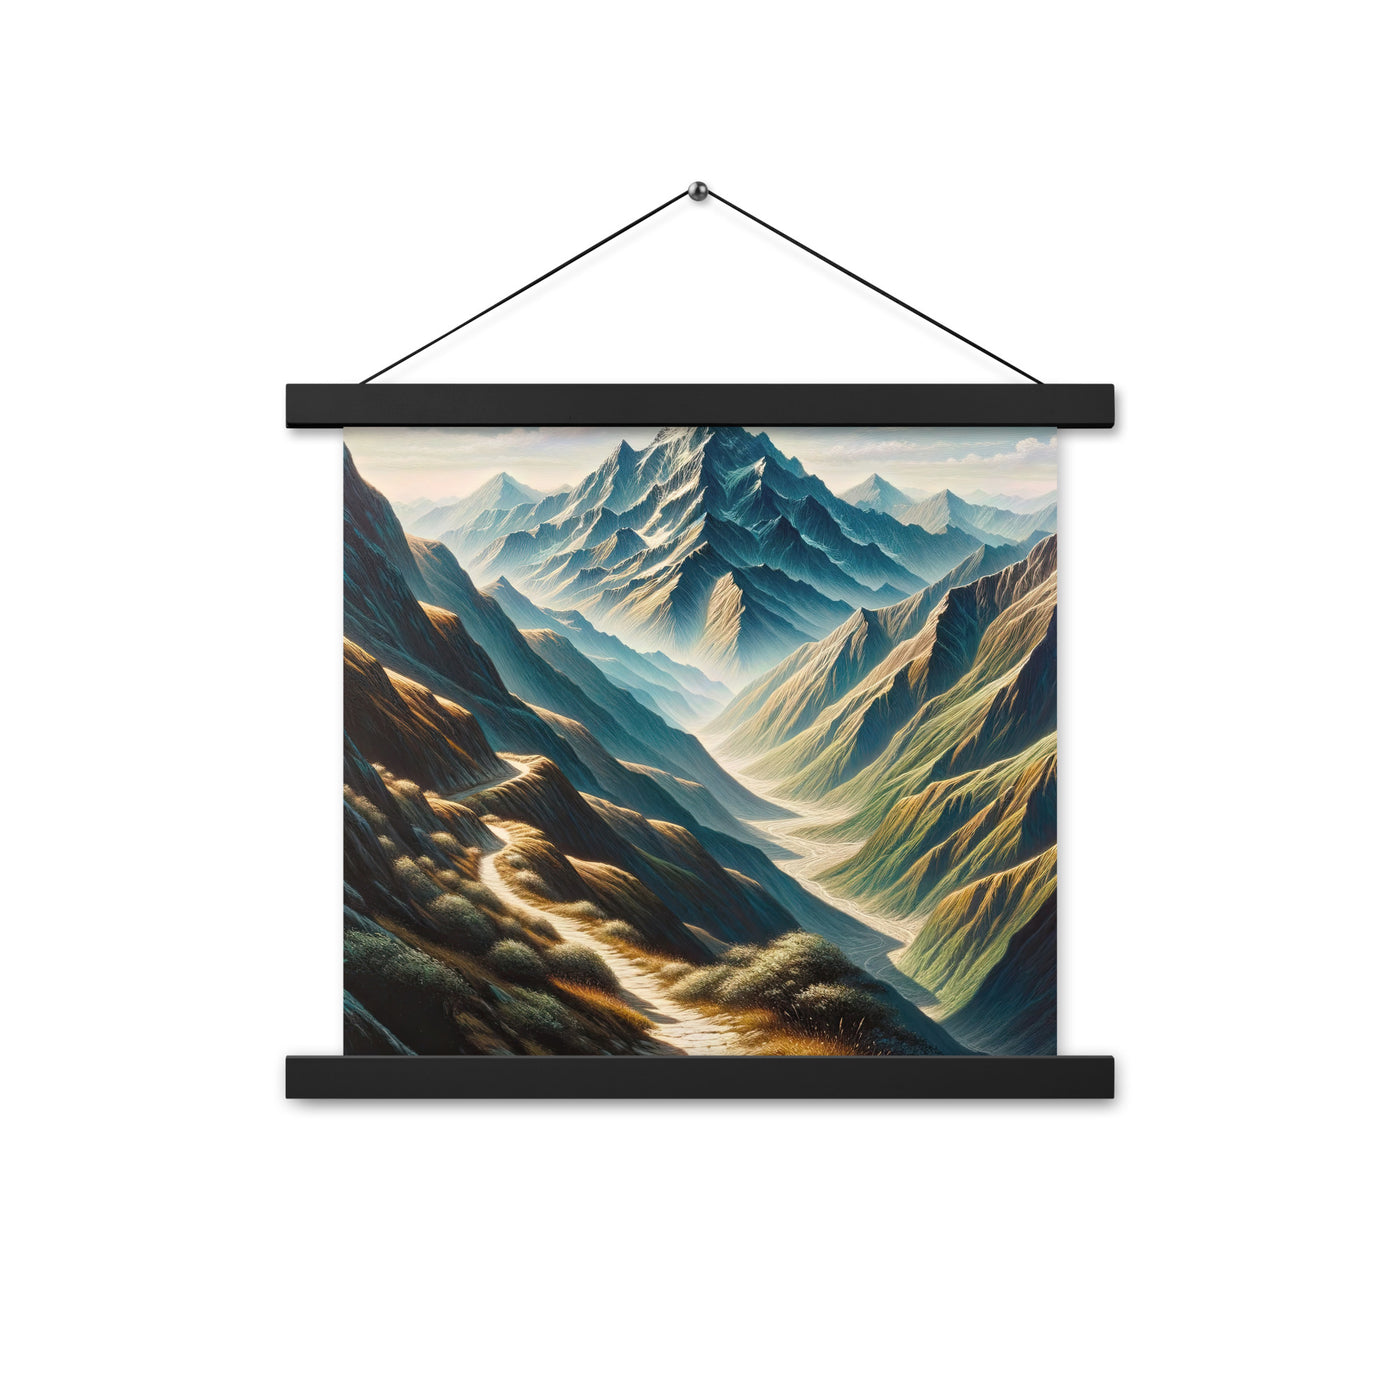 Berglandschaft: Acrylgemälde mit hervorgehobenem Pfad - Premium Poster mit Aufhängung berge xxx yyy zzz 35.6 x 35.6 cm